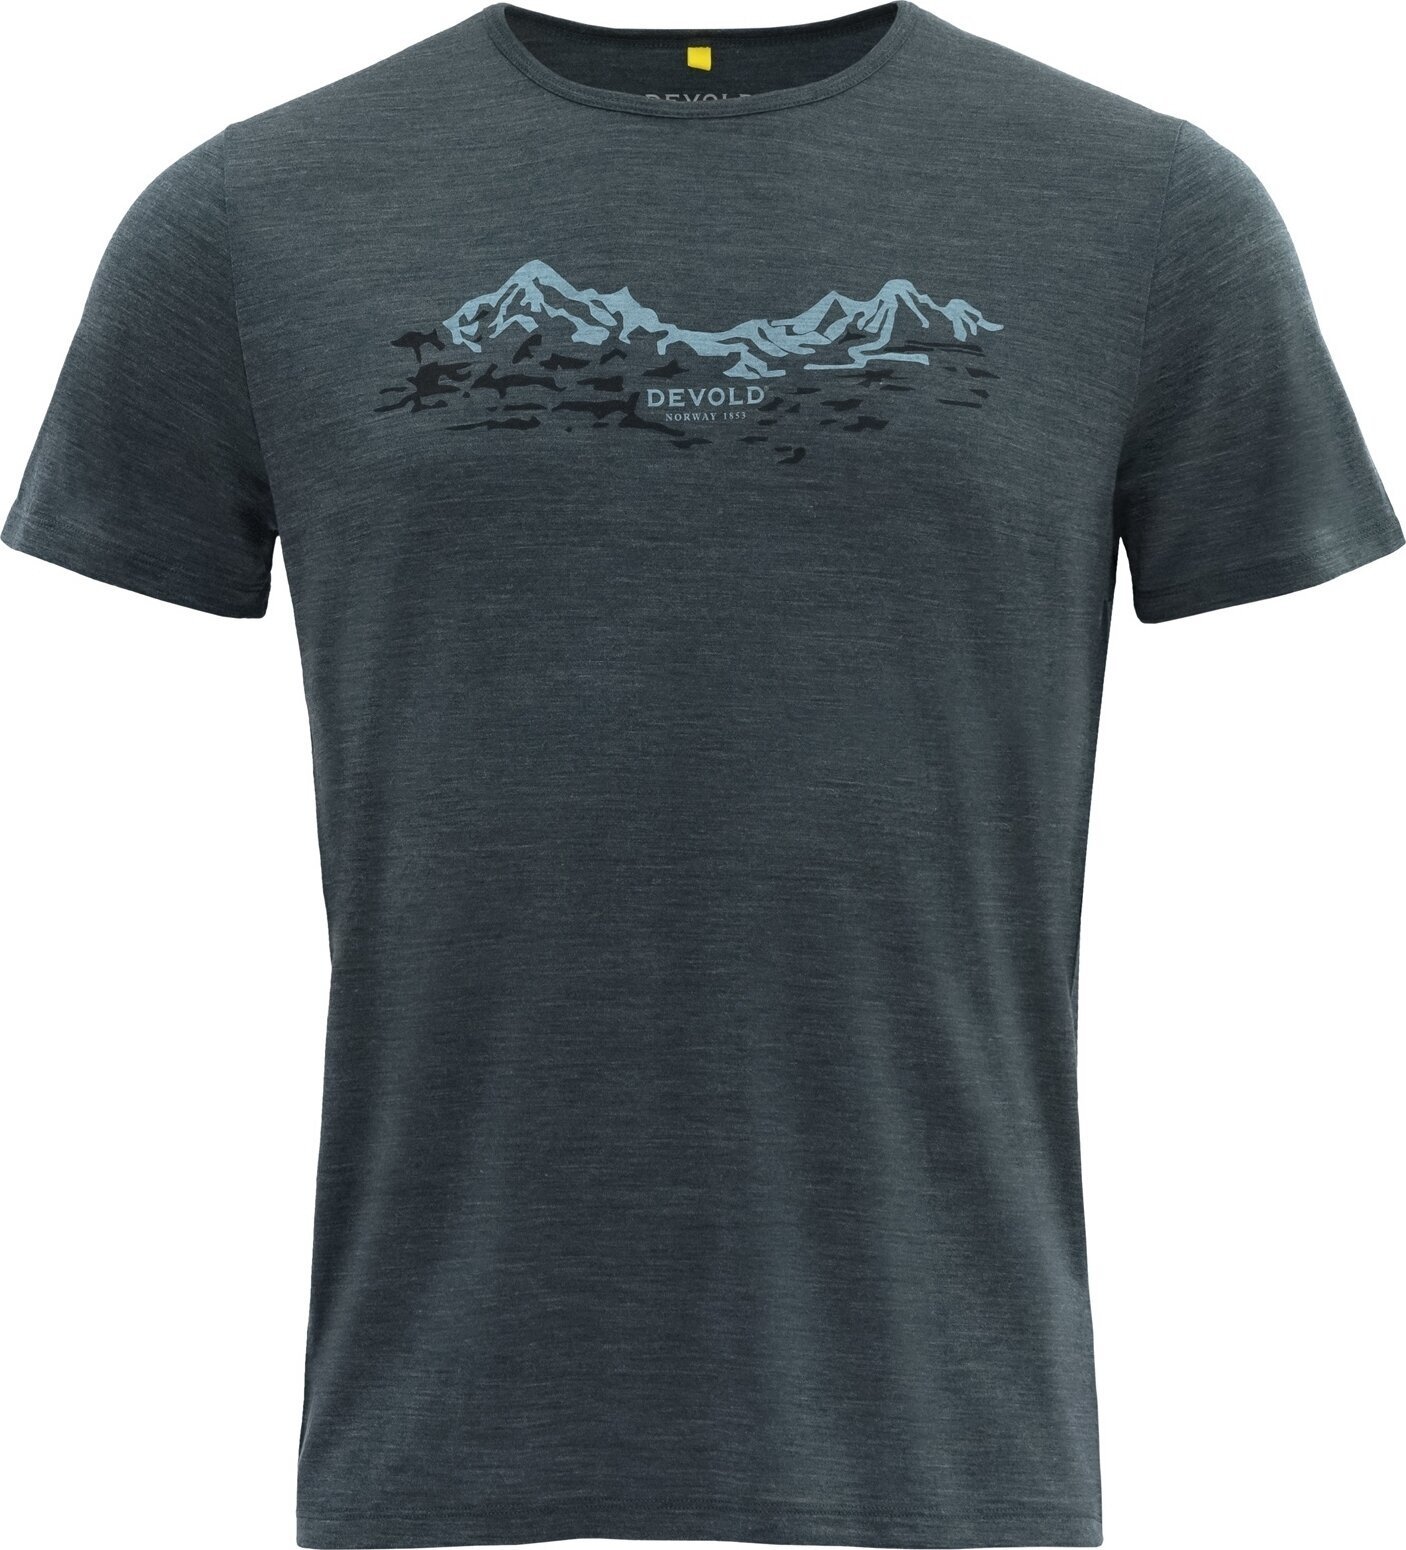 Friluftsliv T-shirt Devold Utladalen Merino 130 Tee Man Woods S T-shirt